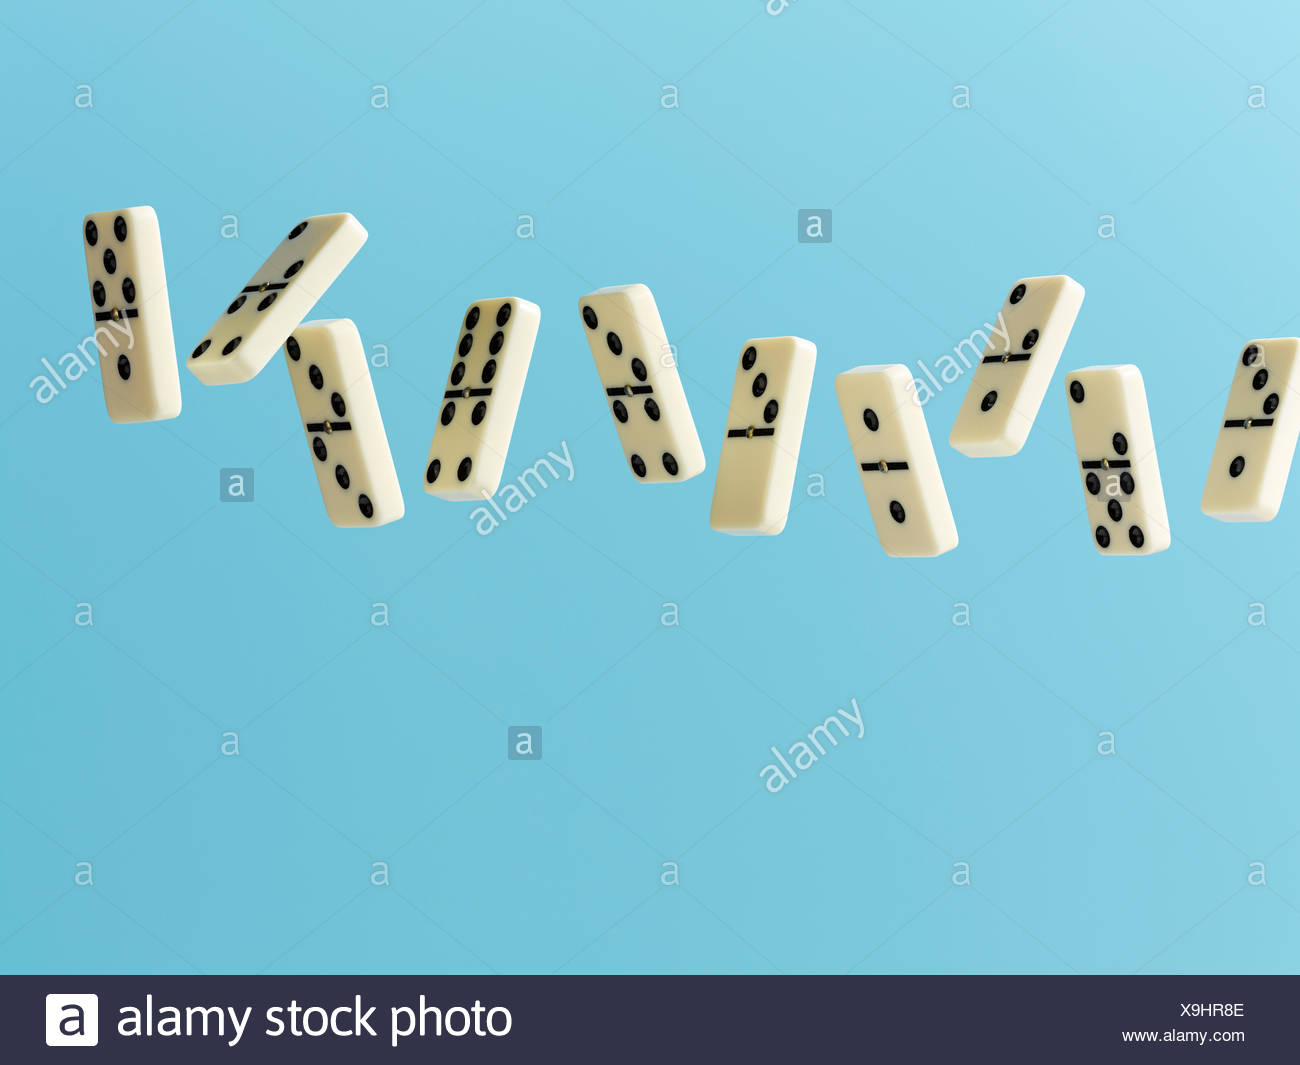 Floating dominos on blue background Stock Photo 281289246   Alamy